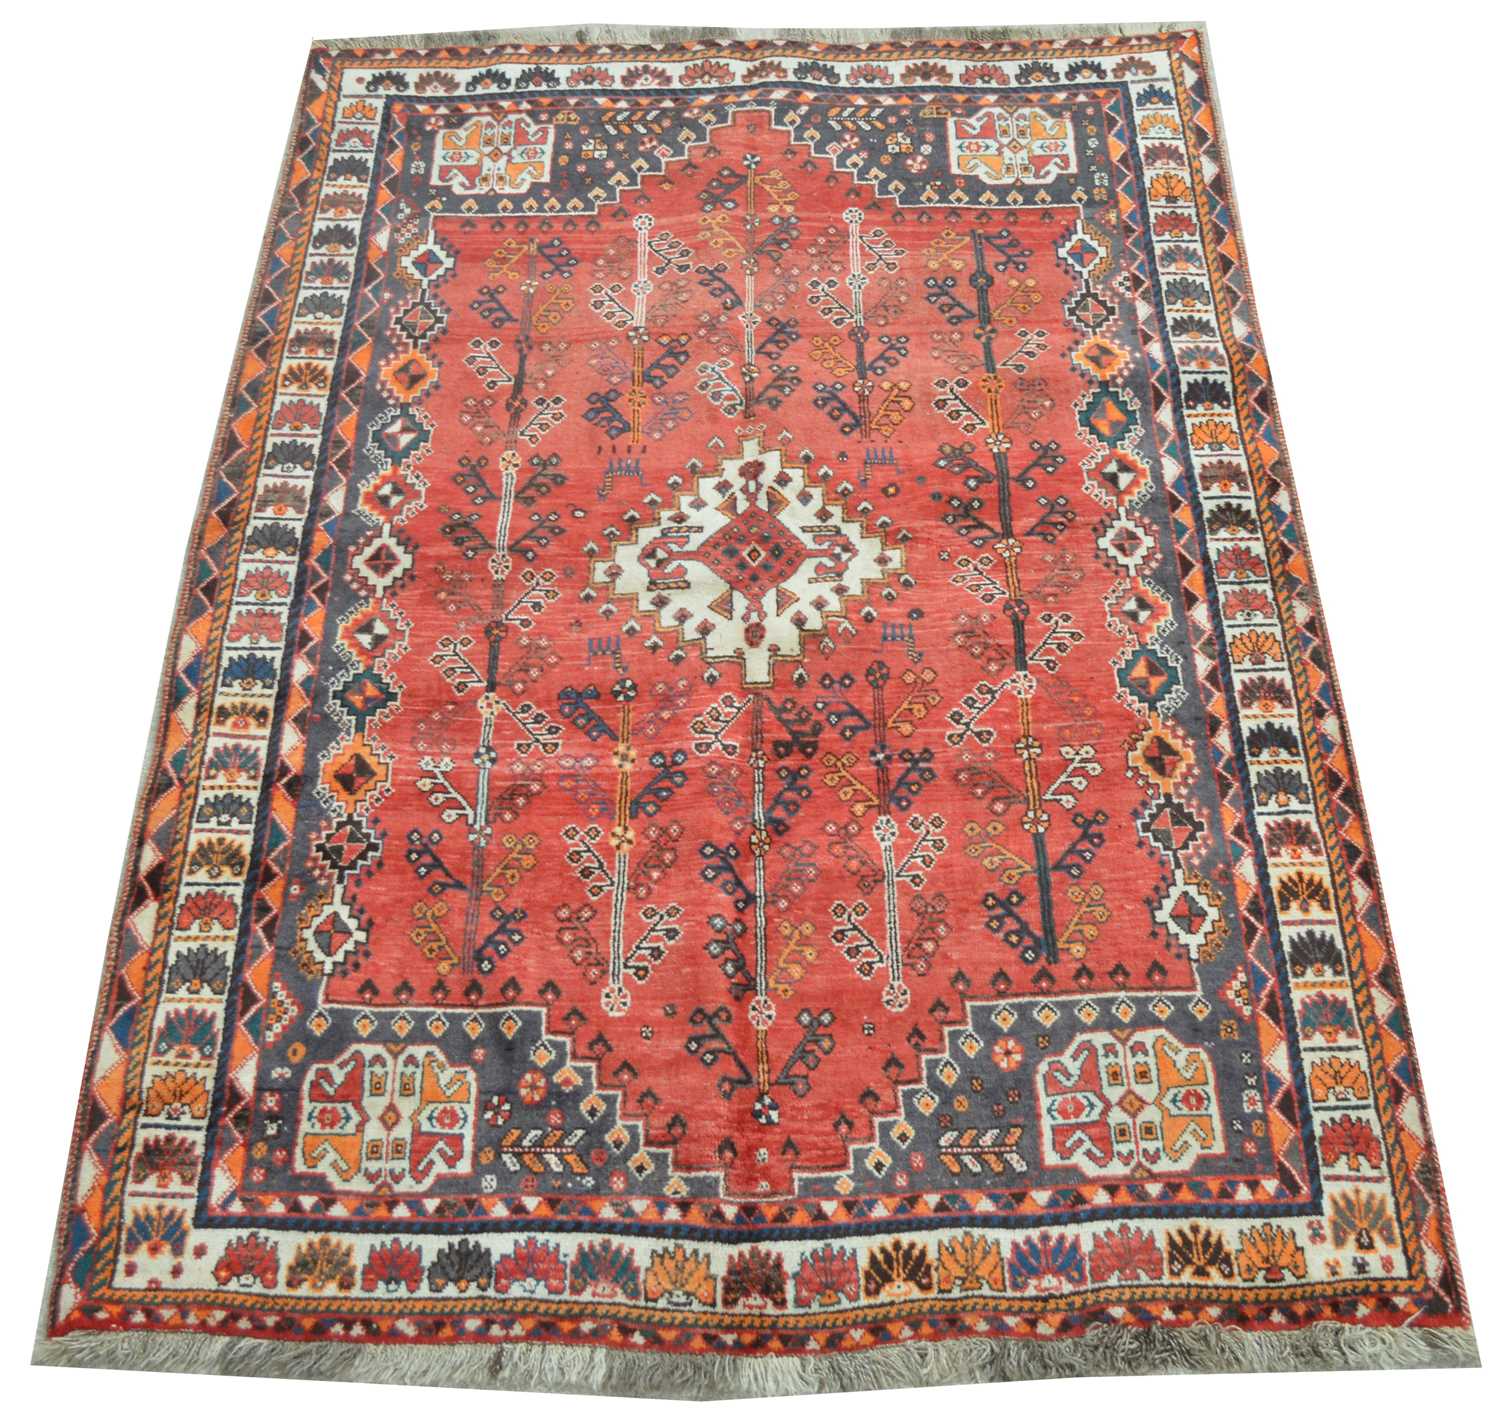 Lot 715 - Qashqai carpet